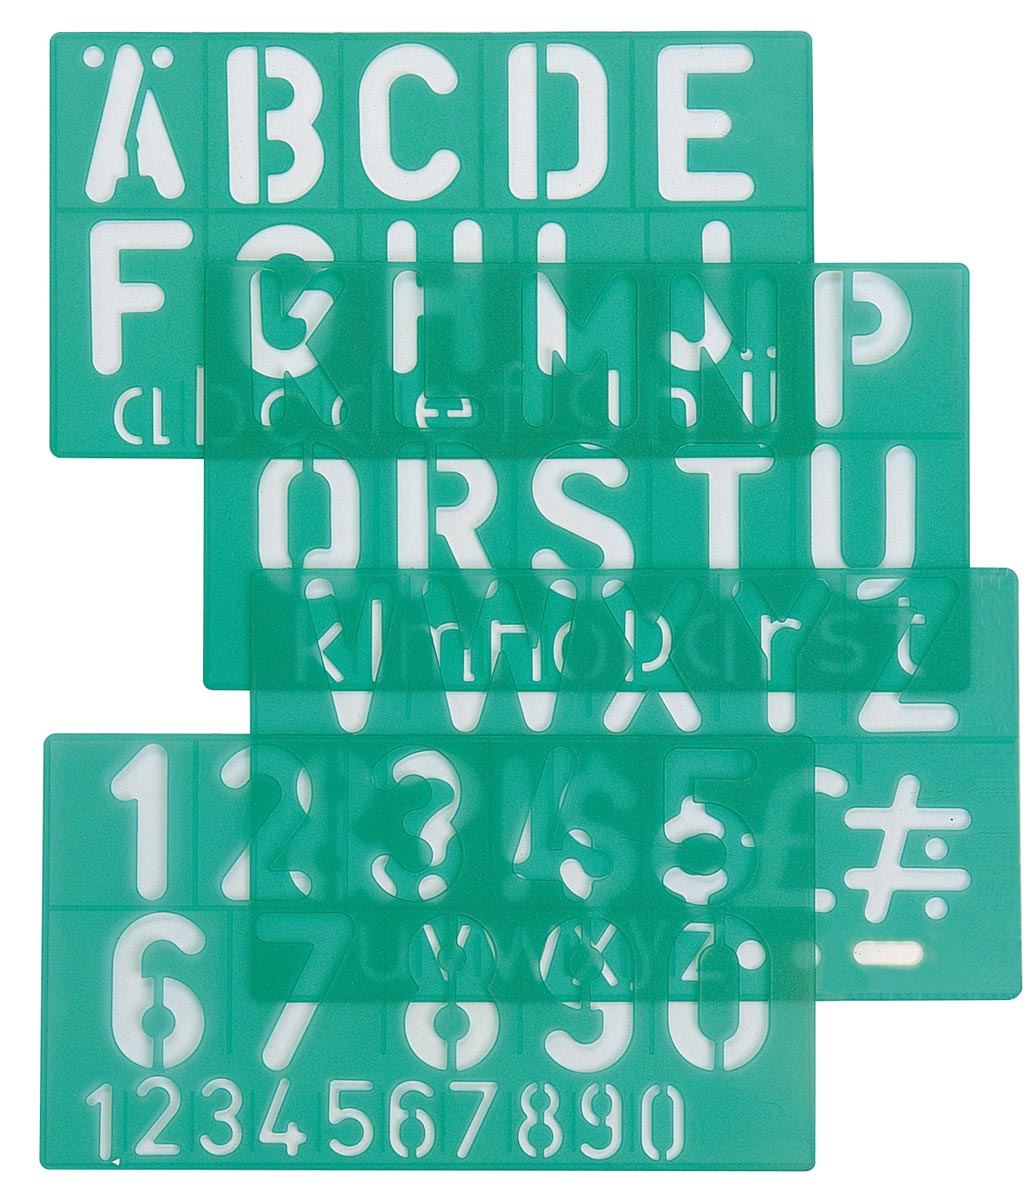 Linex lettersjabloon 30 mm